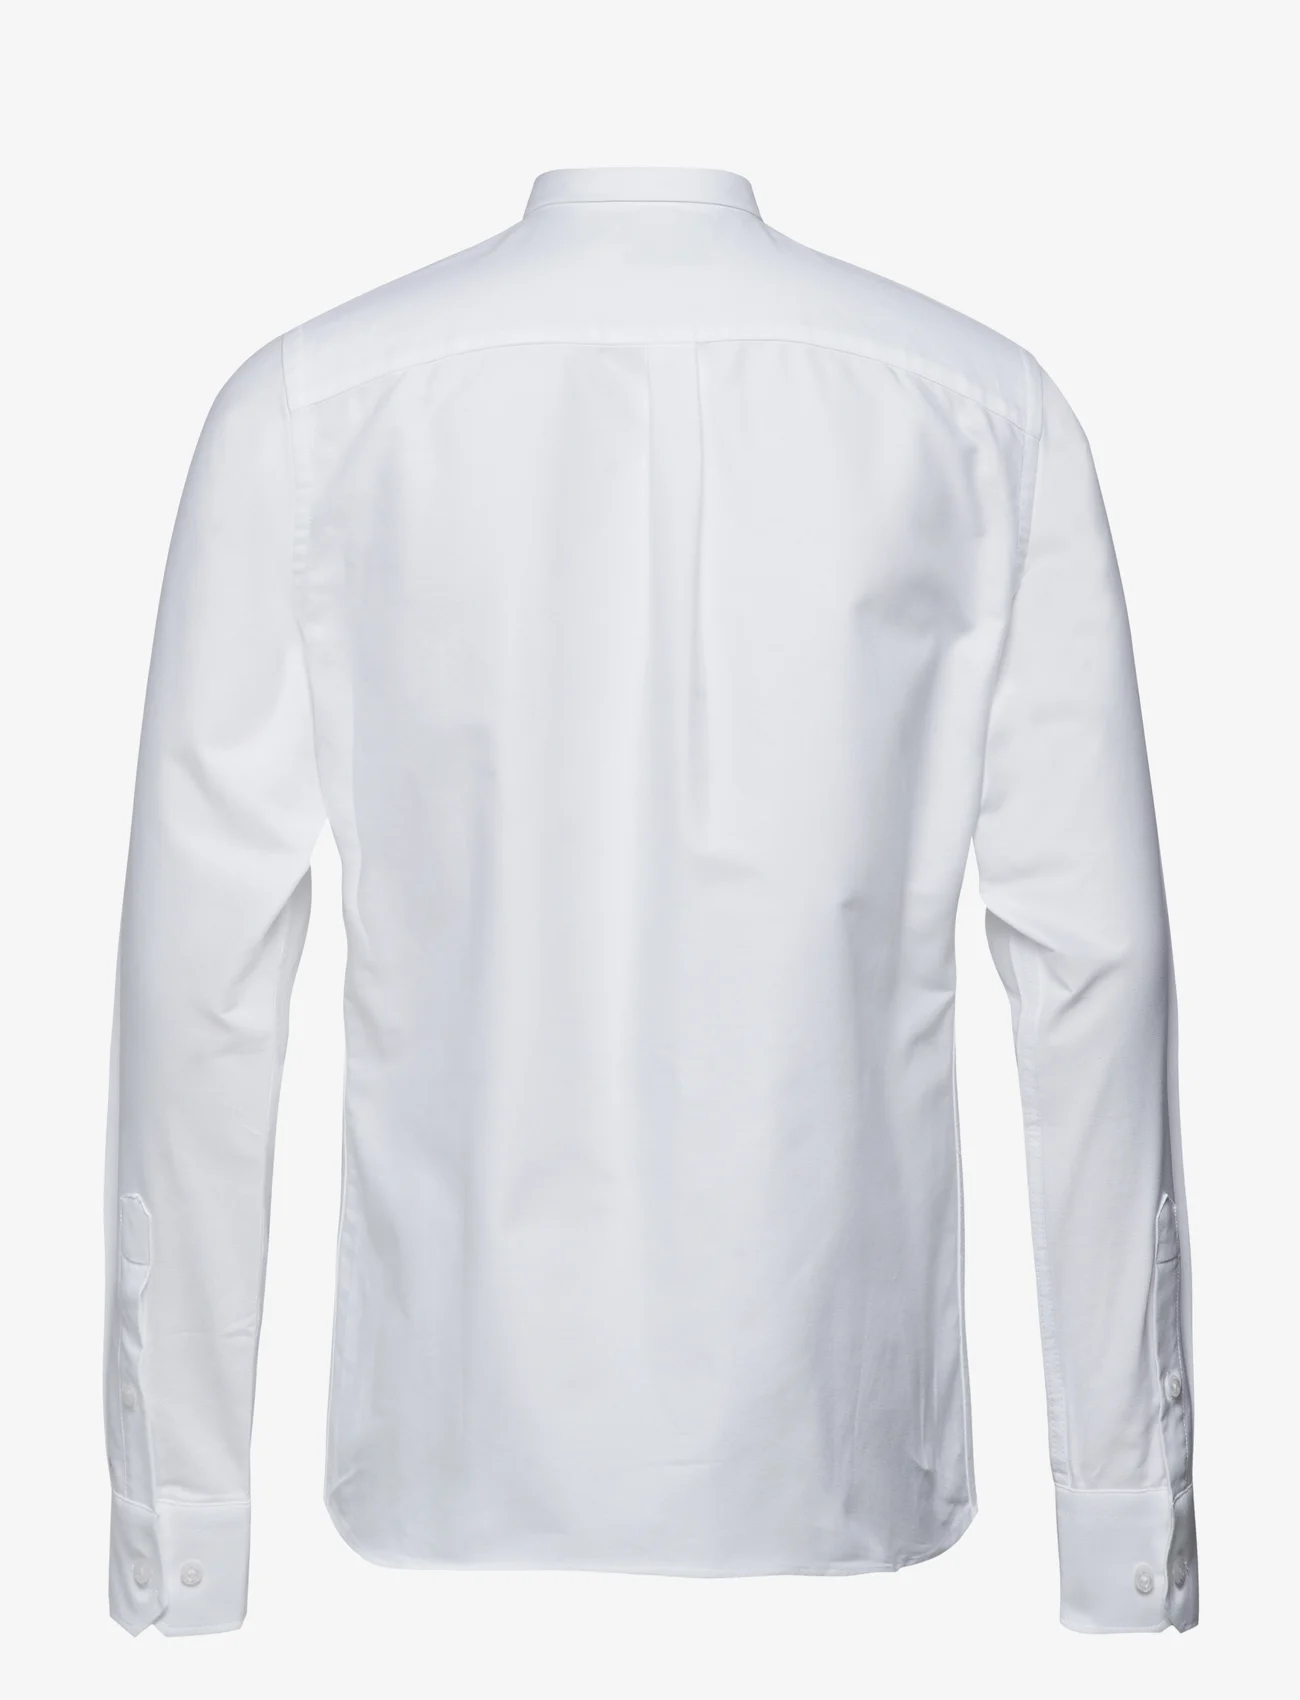 Les Deux - Christoph Oxford Shirt - nordischer stil - white - 1